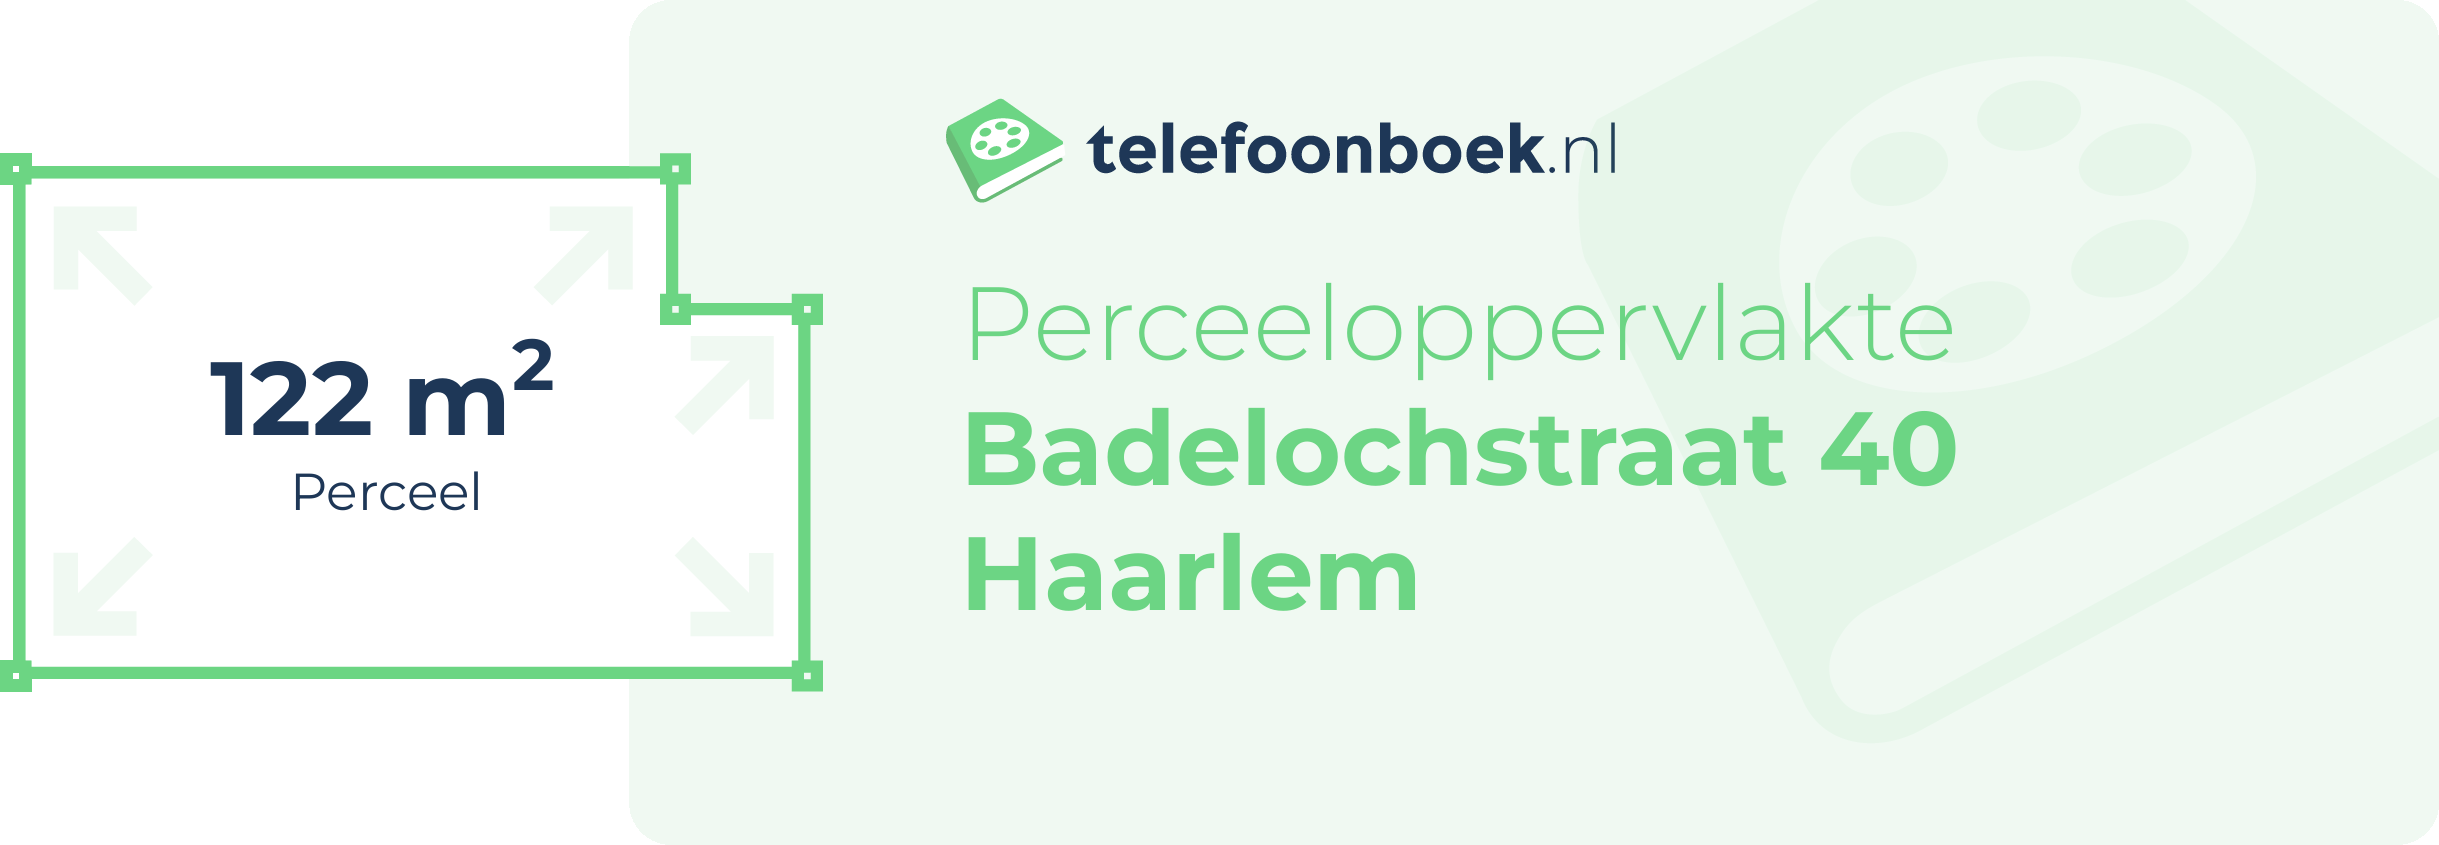 Perceeloppervlakte Badelochstraat 40 Haarlem